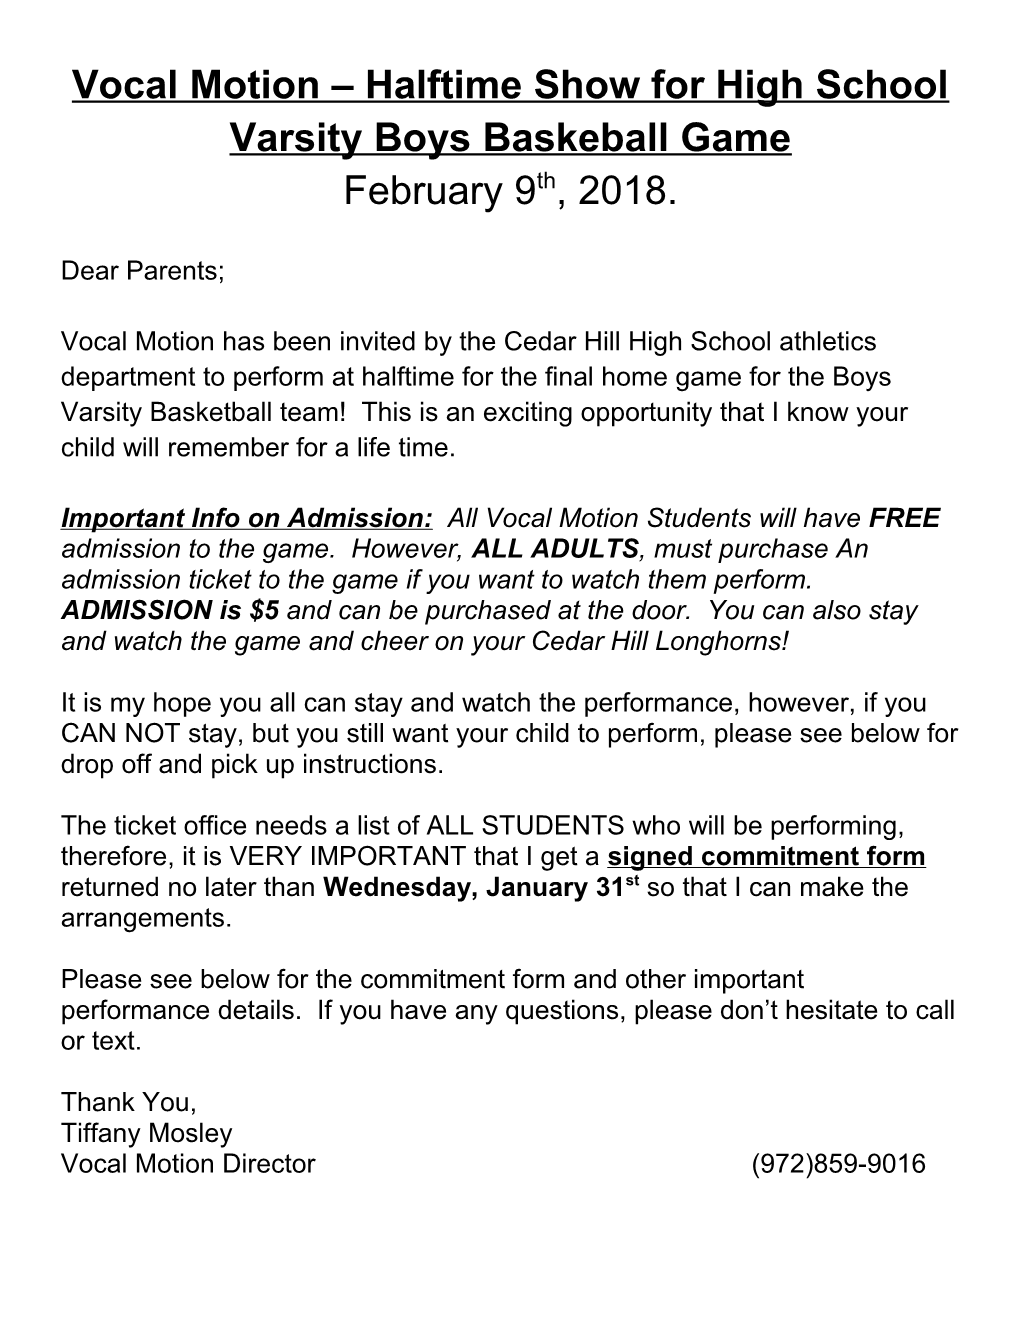 Vocal Motion Halftime Show for High School Varsity Boys Baskeball Game